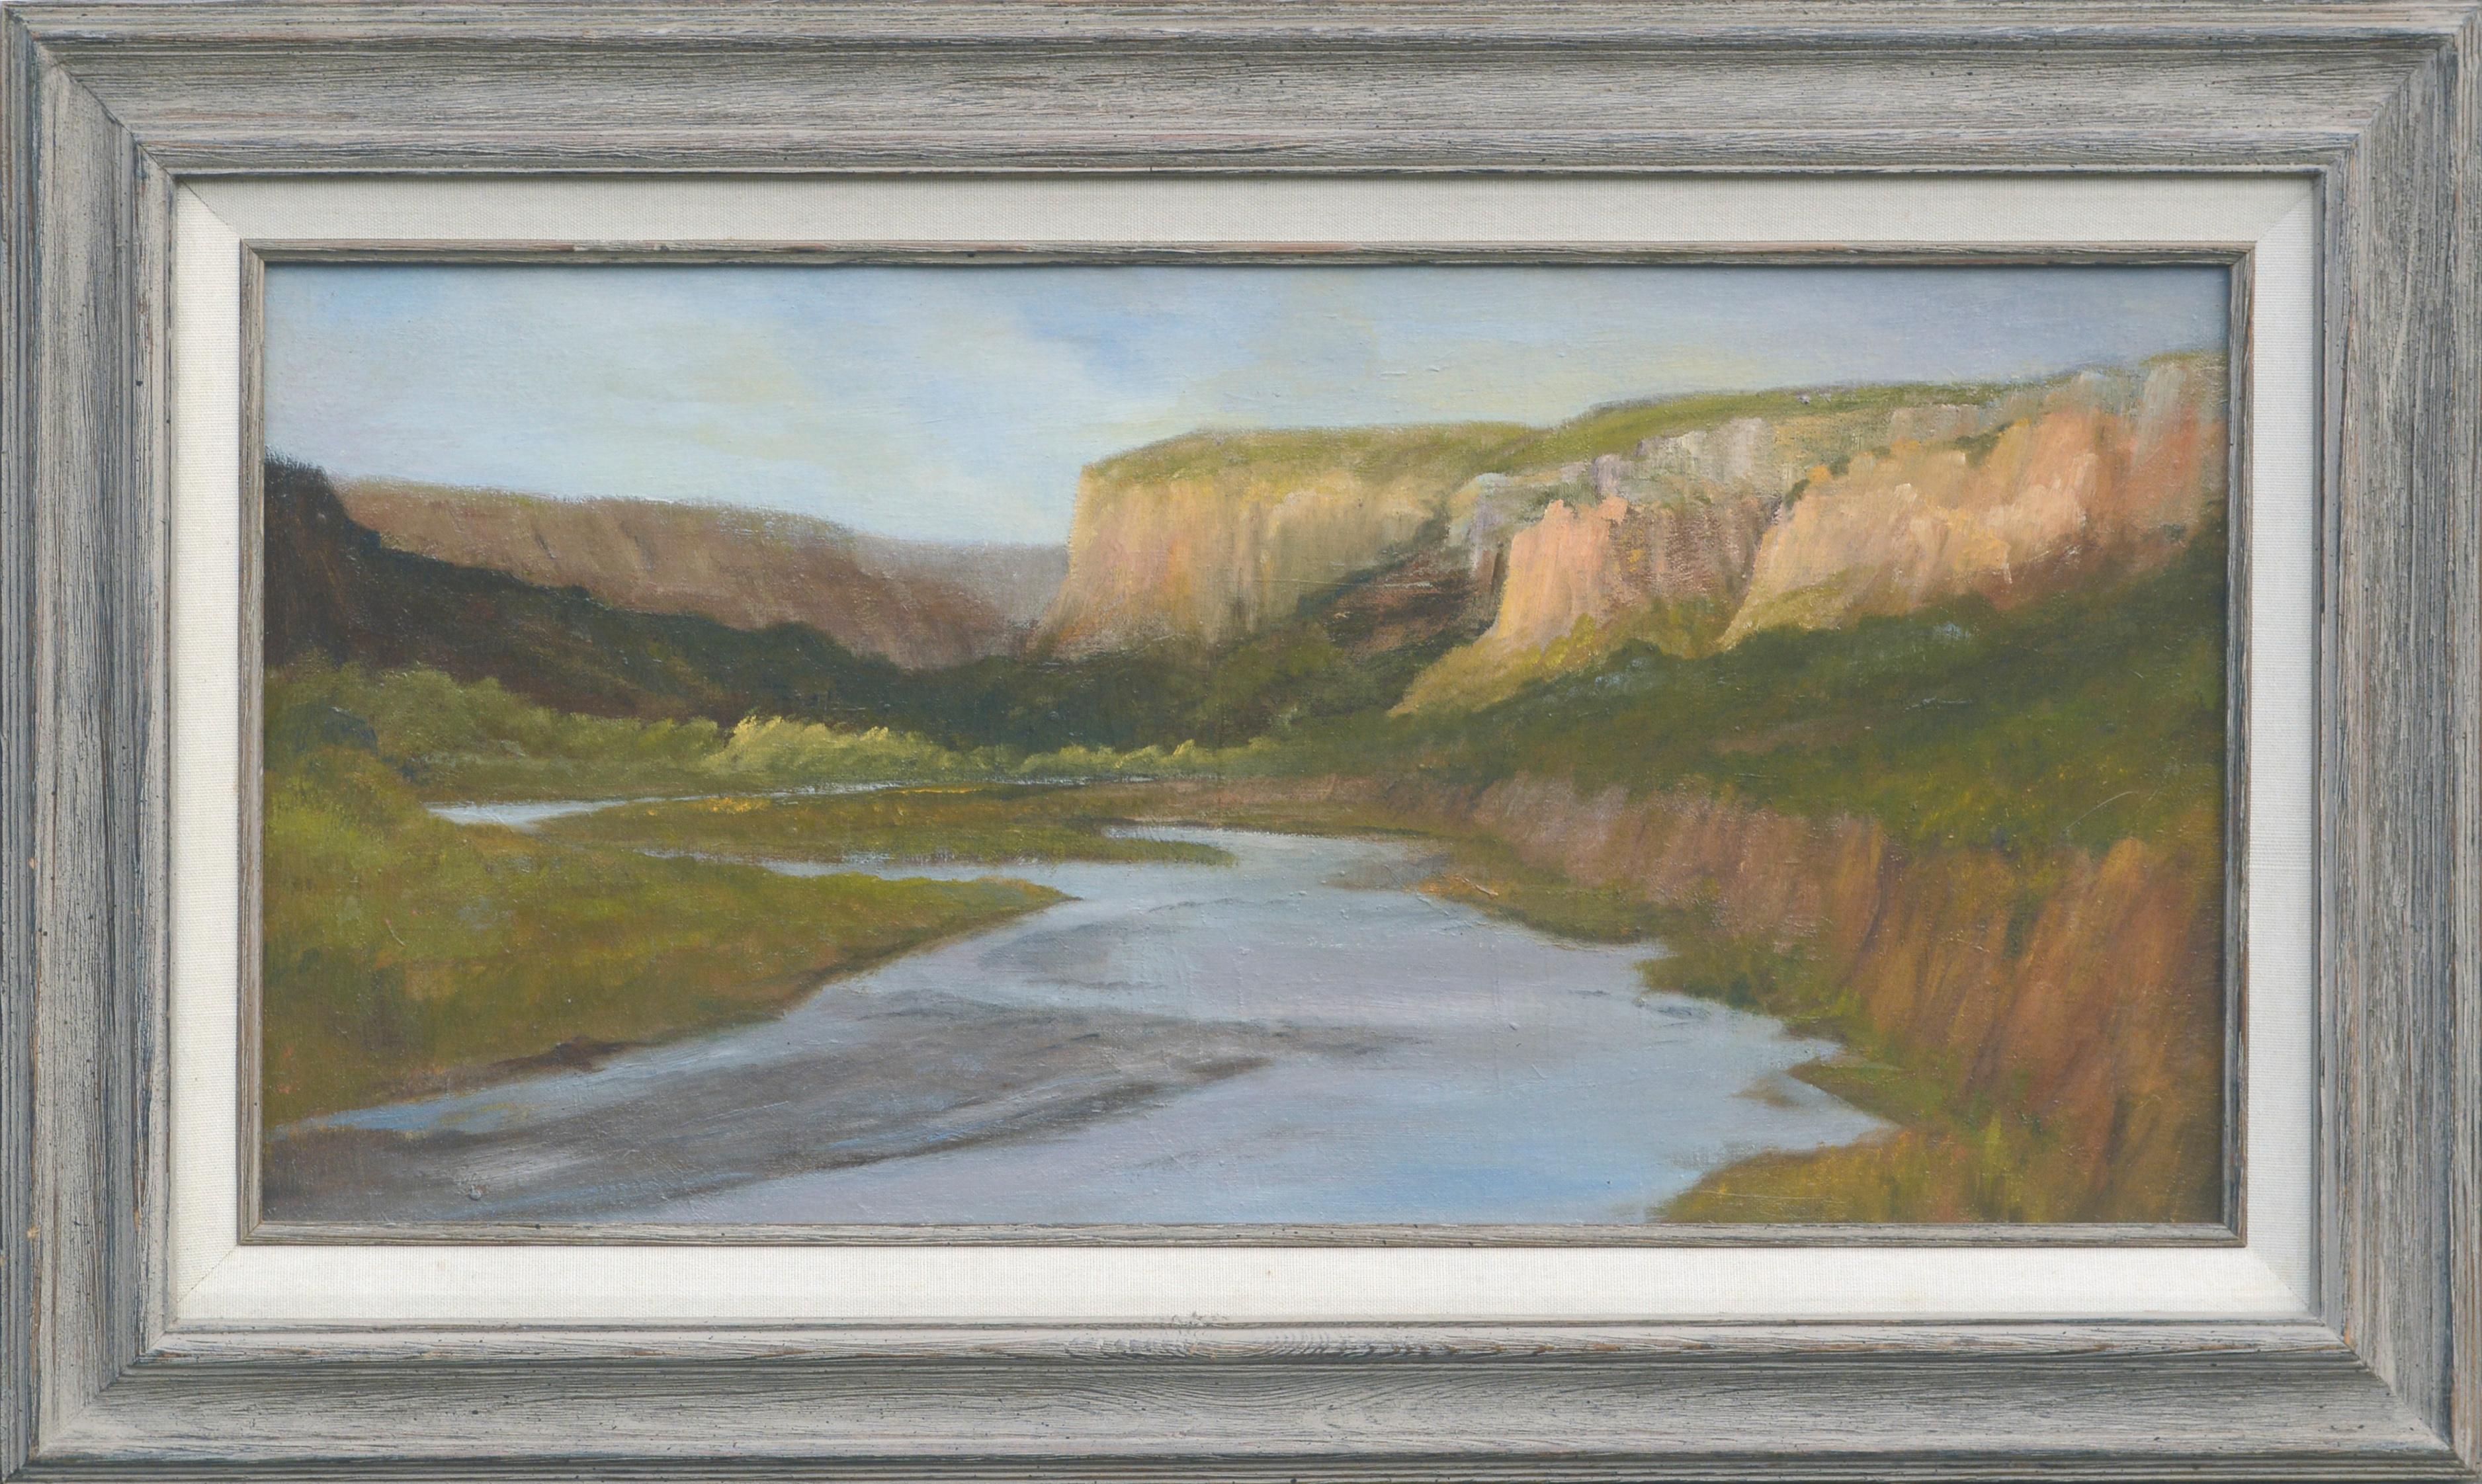 Kenneth Lucas Landscape Painting - The River Mouth - Landscape